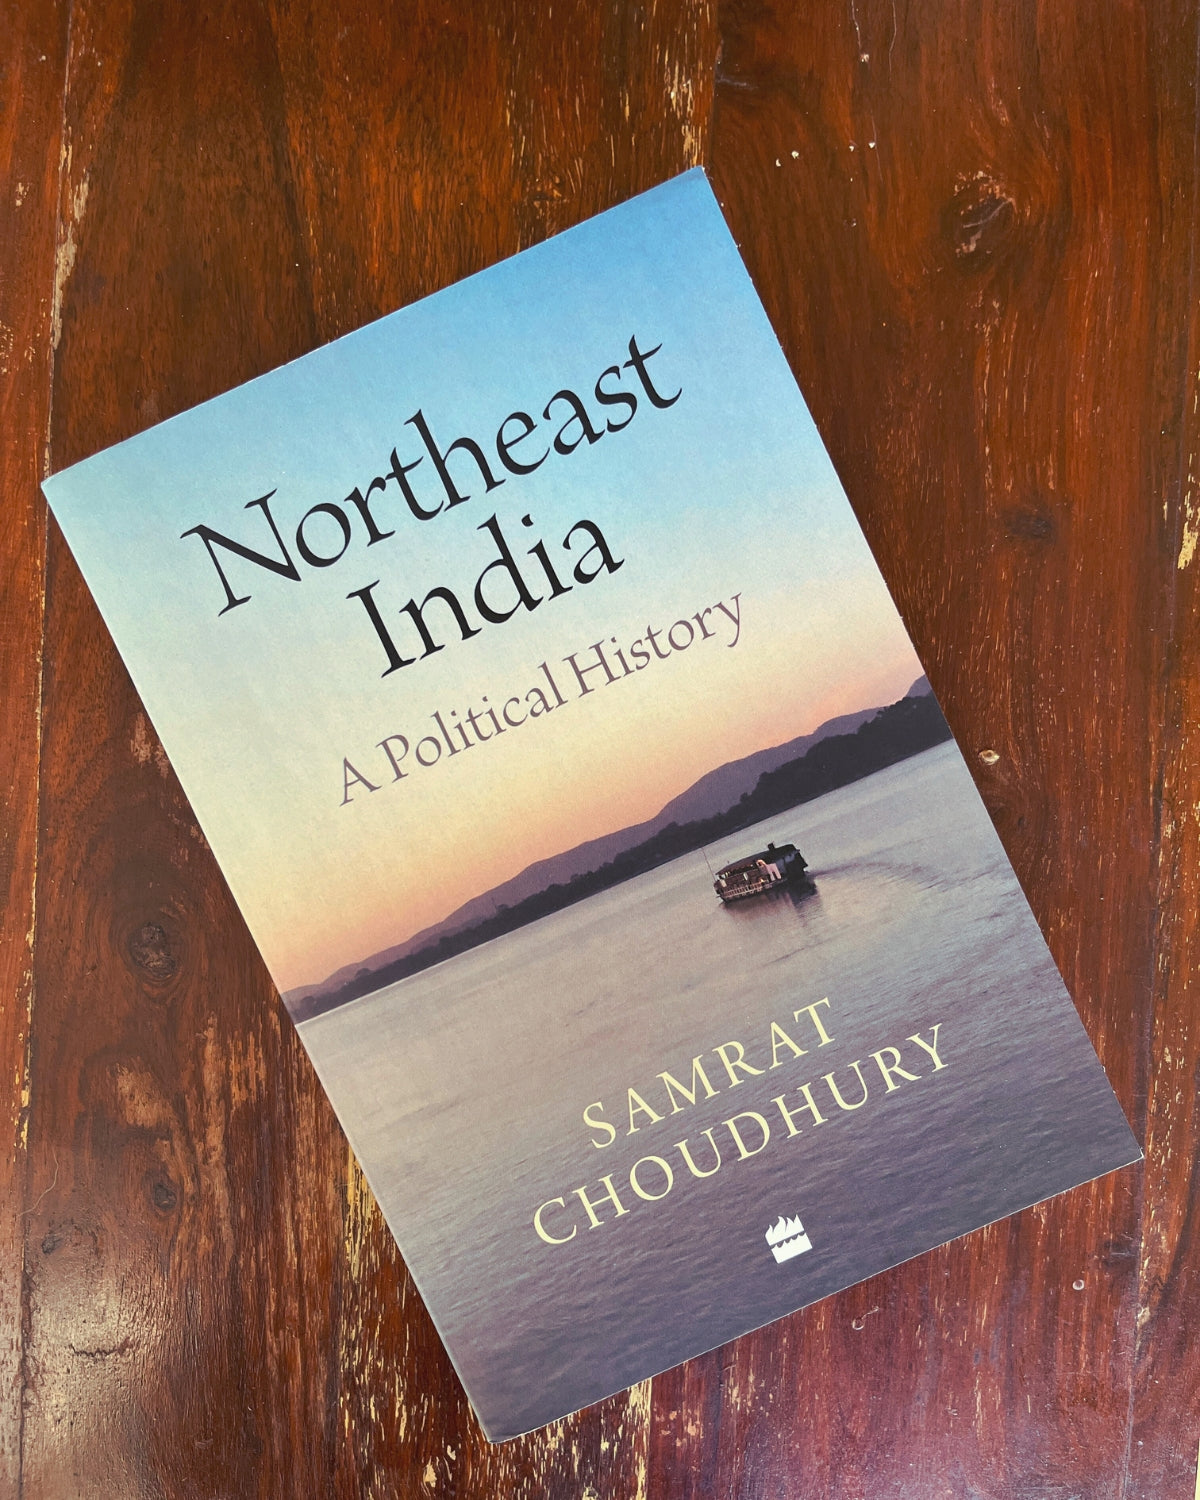 Northeast India : A Political History - Samrat Choudhury